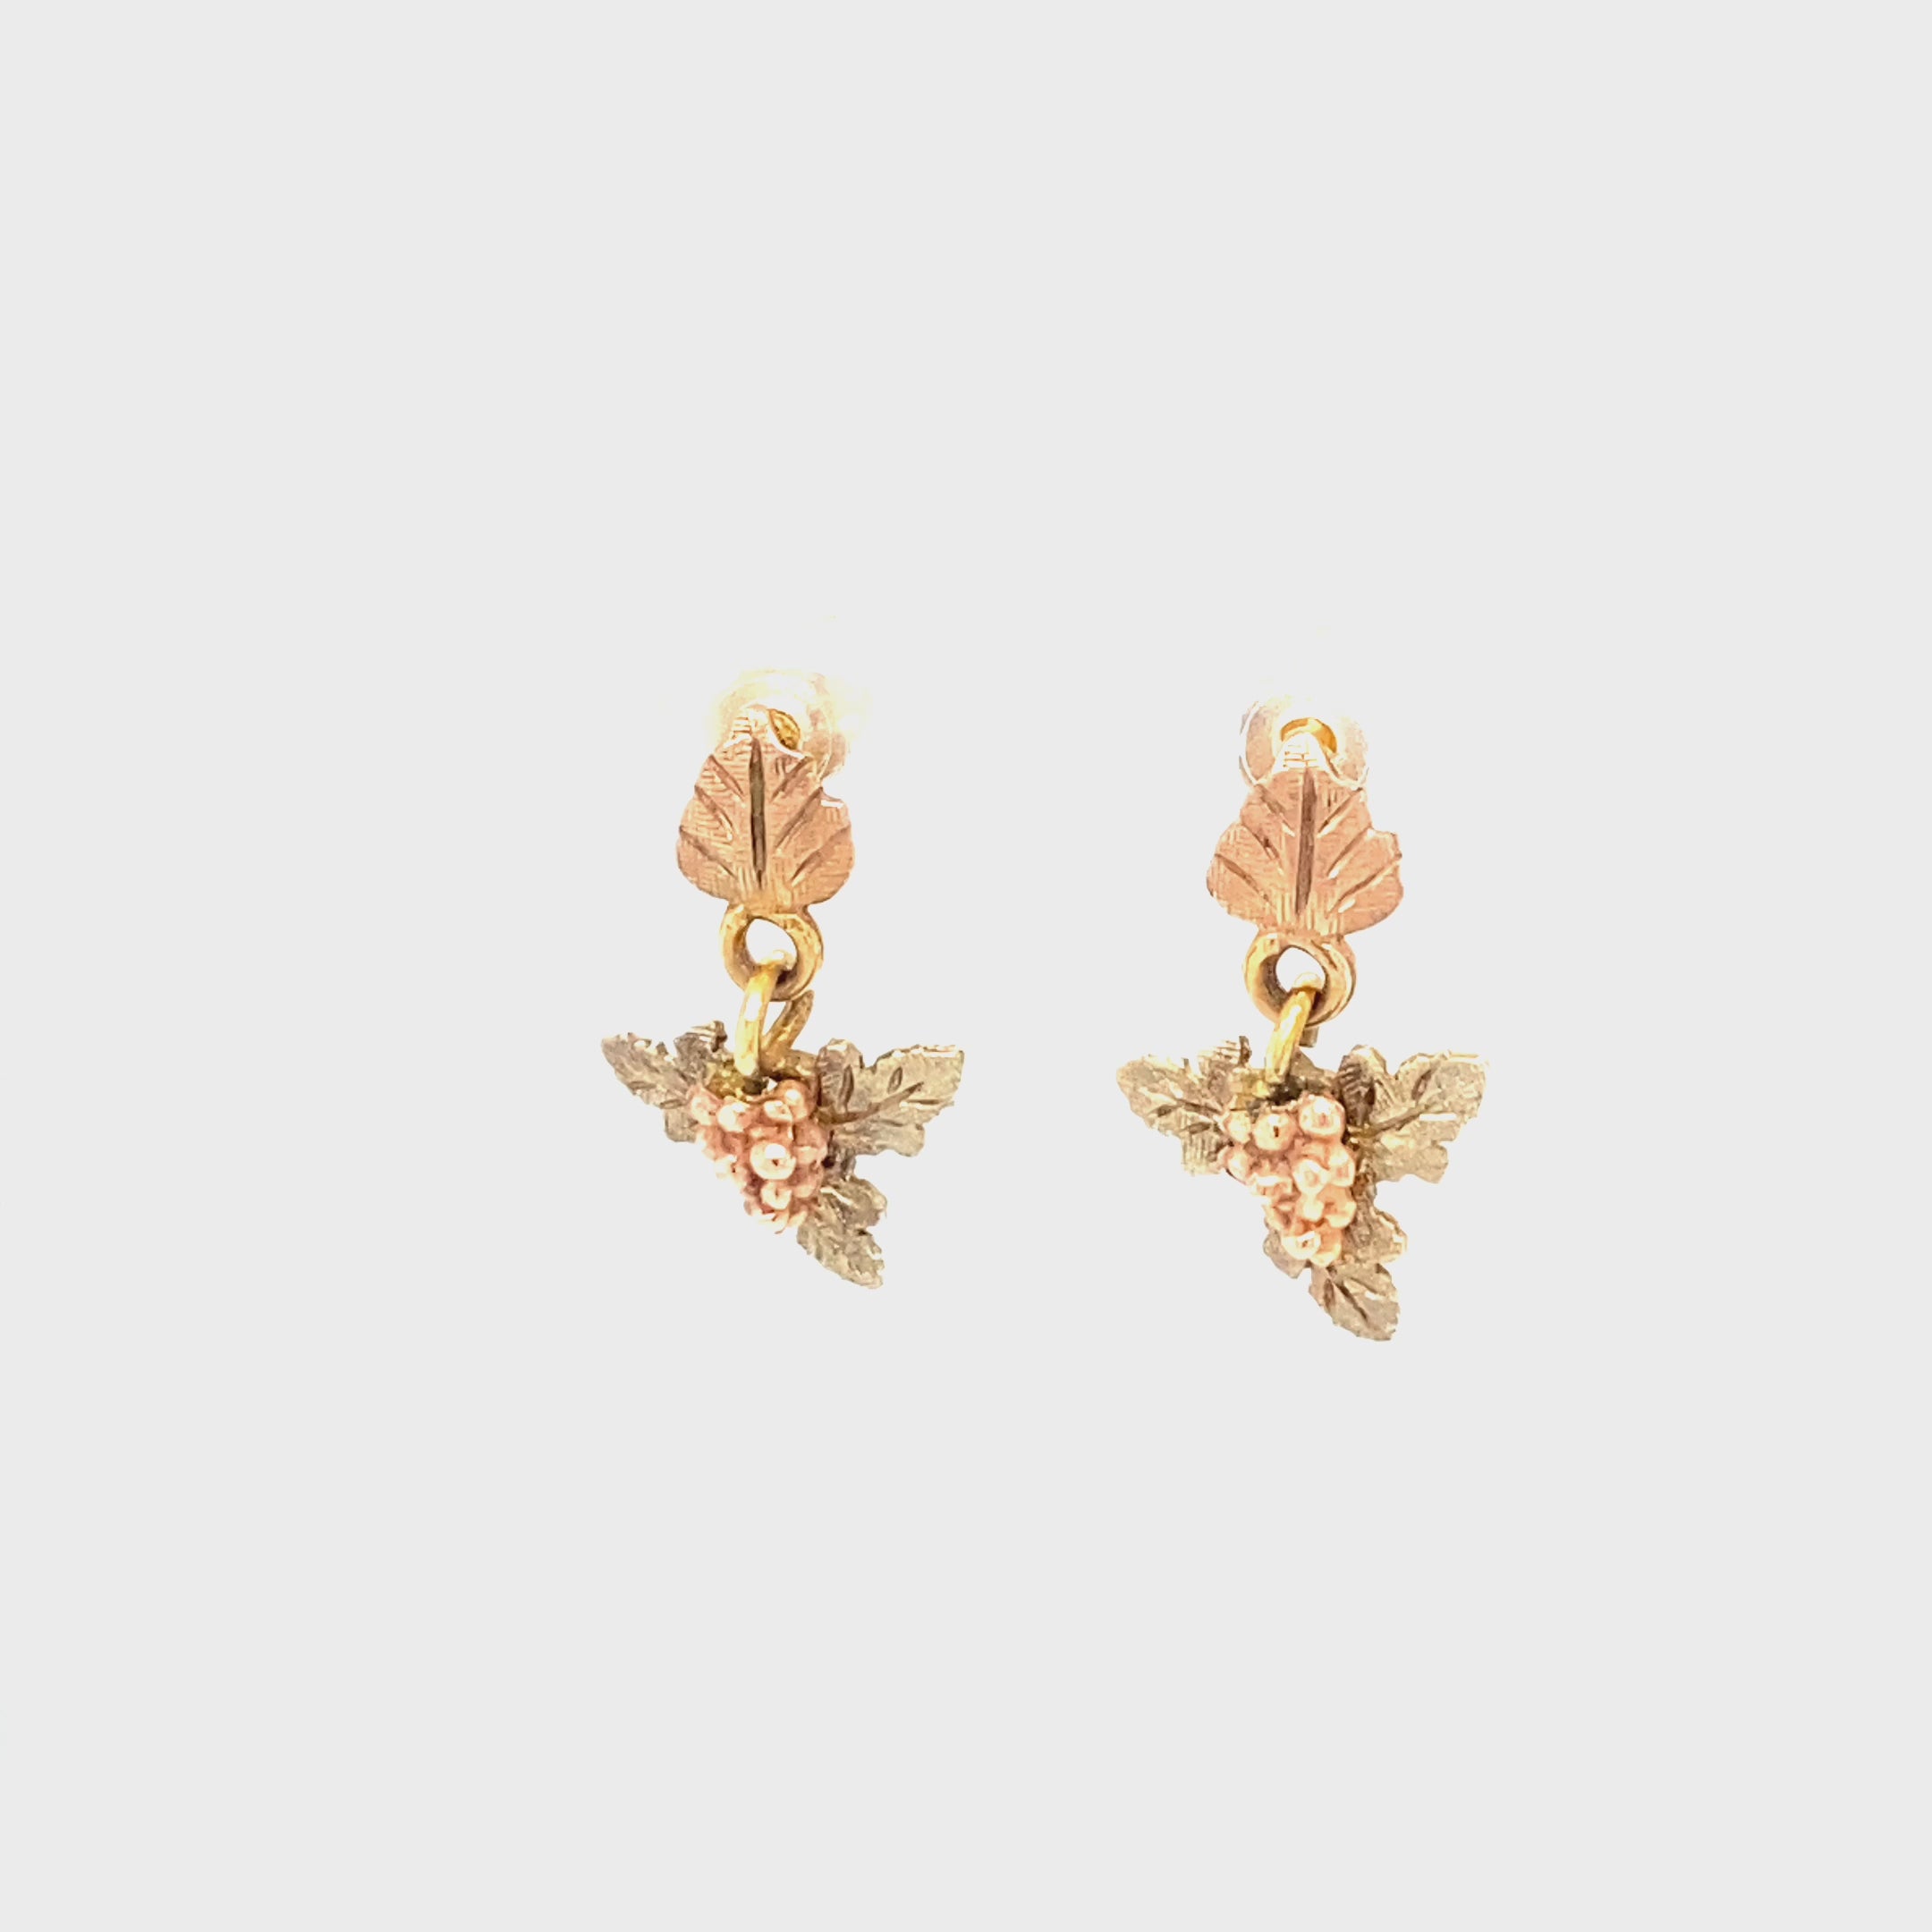 Black Hills Gold Earrings 10K Solid Gold Leaf Earrings Tri-Color Gold Earrings South Dakota Dangle Drop Earrings American USA Vintage Estate